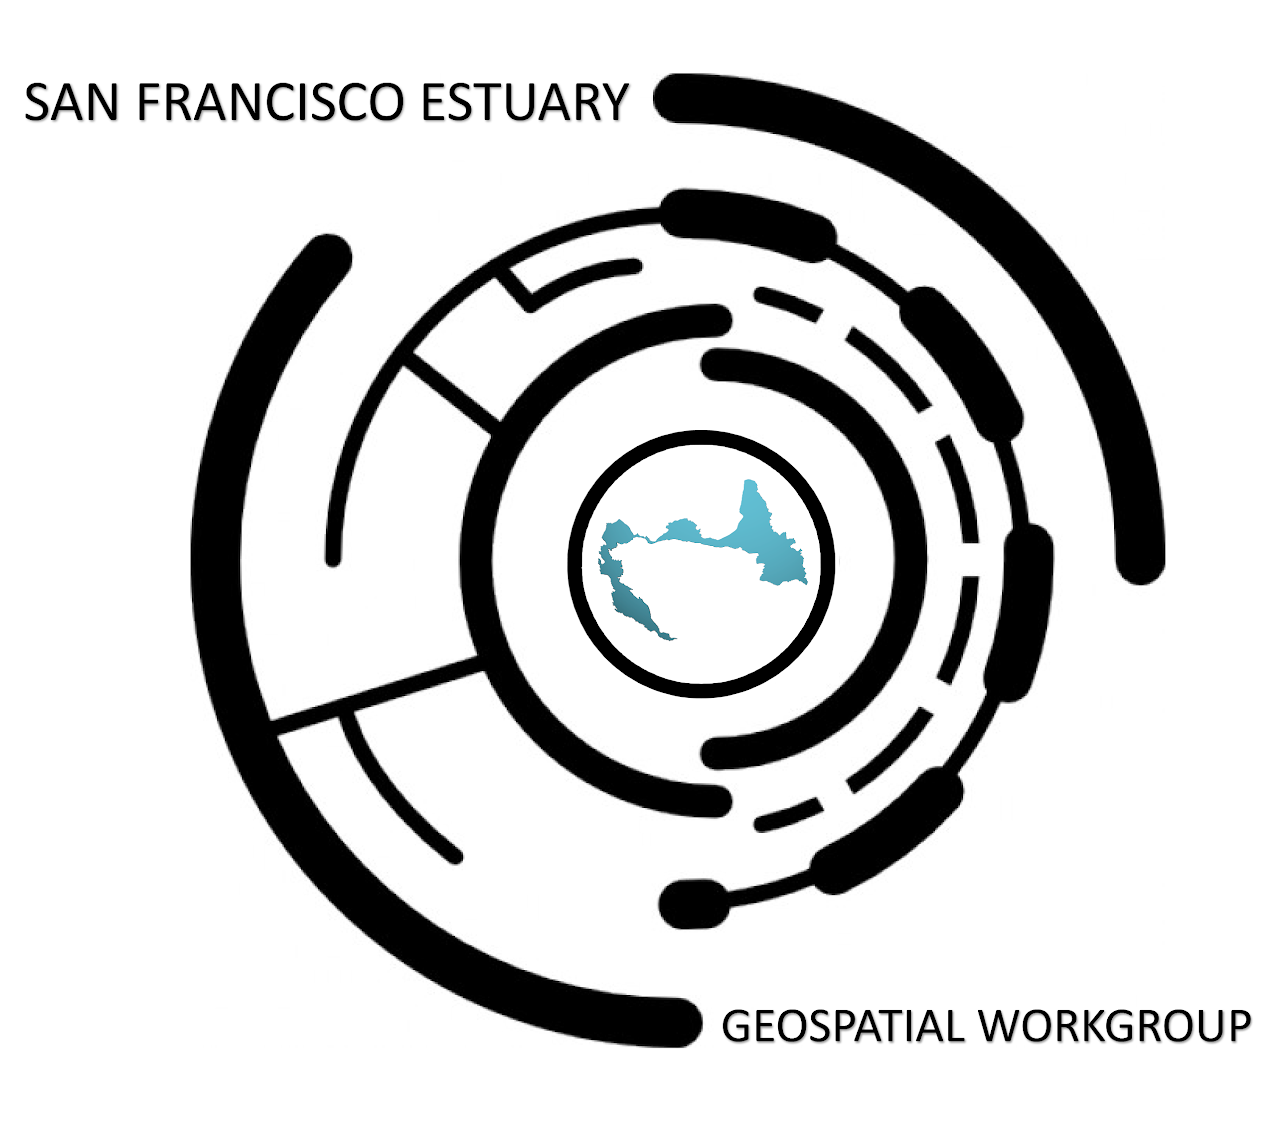 SF Estuary Geospatial Working Group logo